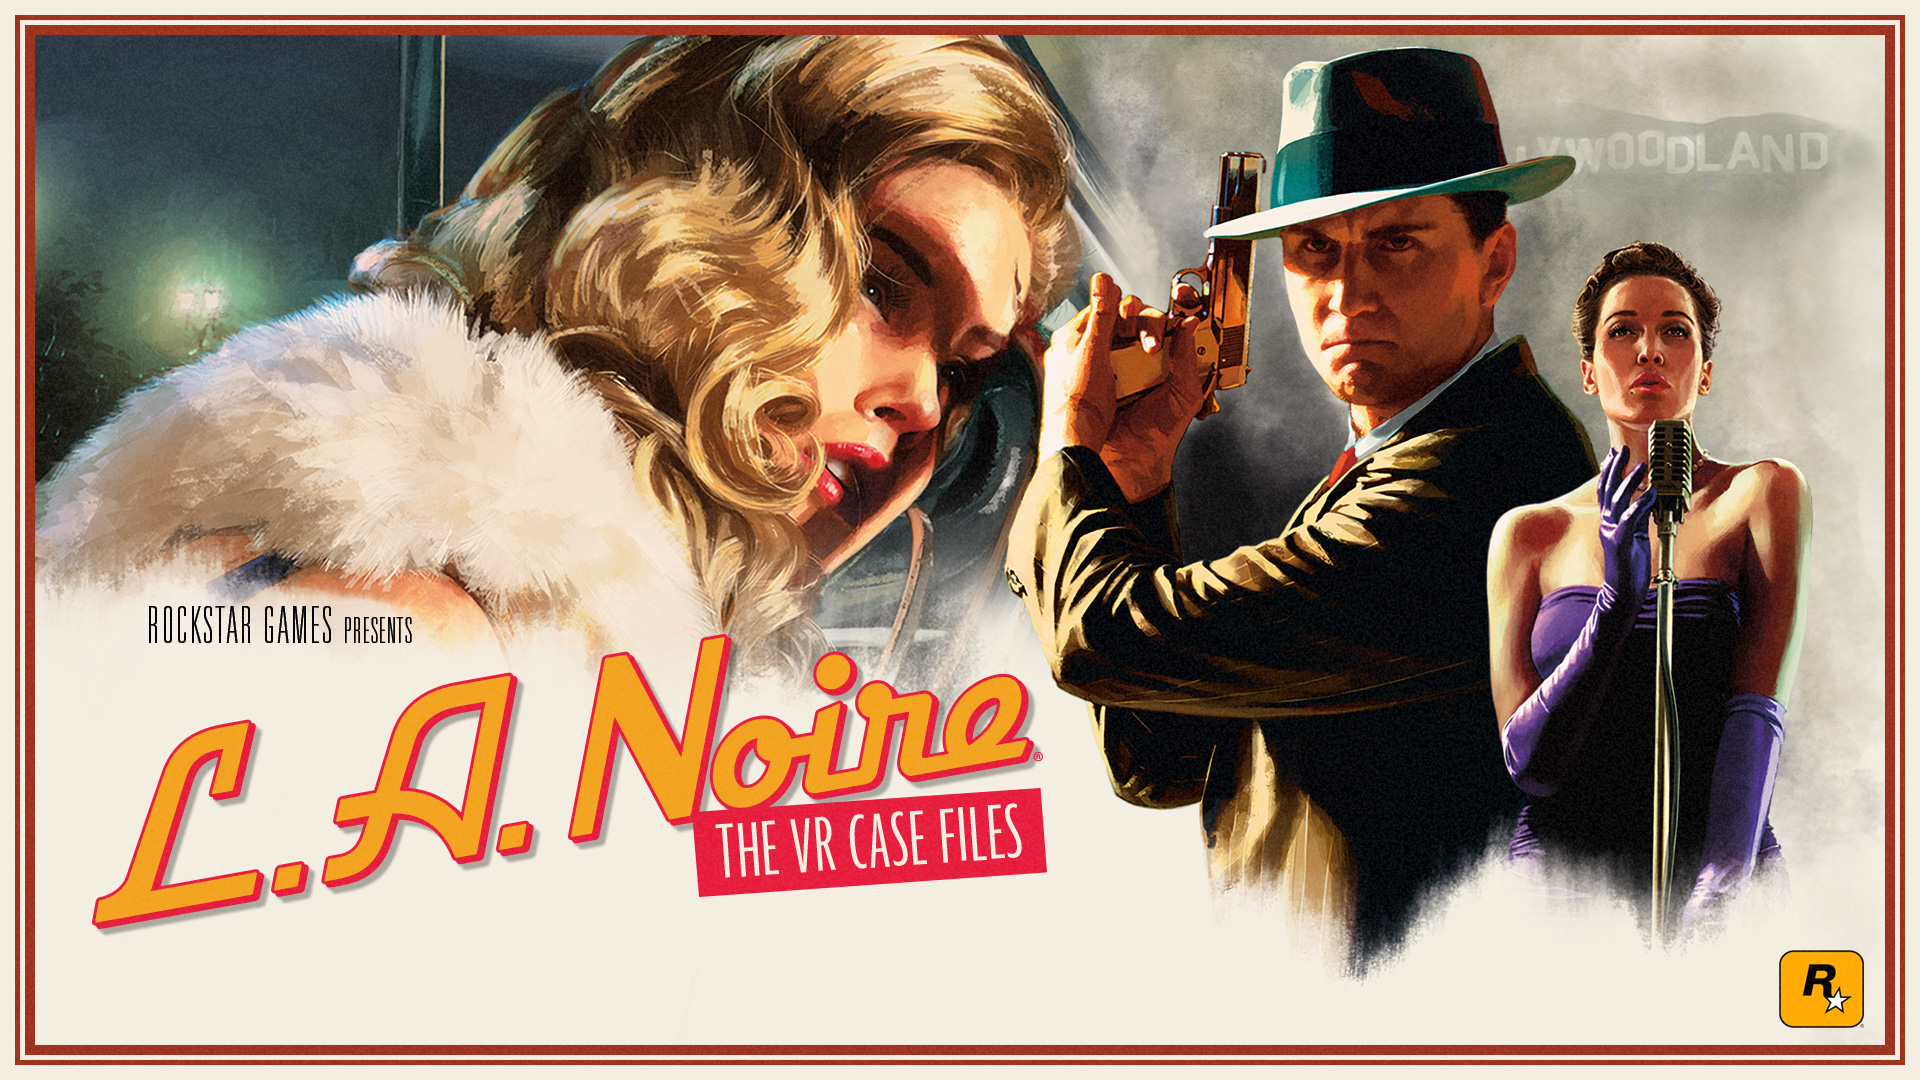 Rockstar Games Announce L.A Noire: The VR Case Files For 